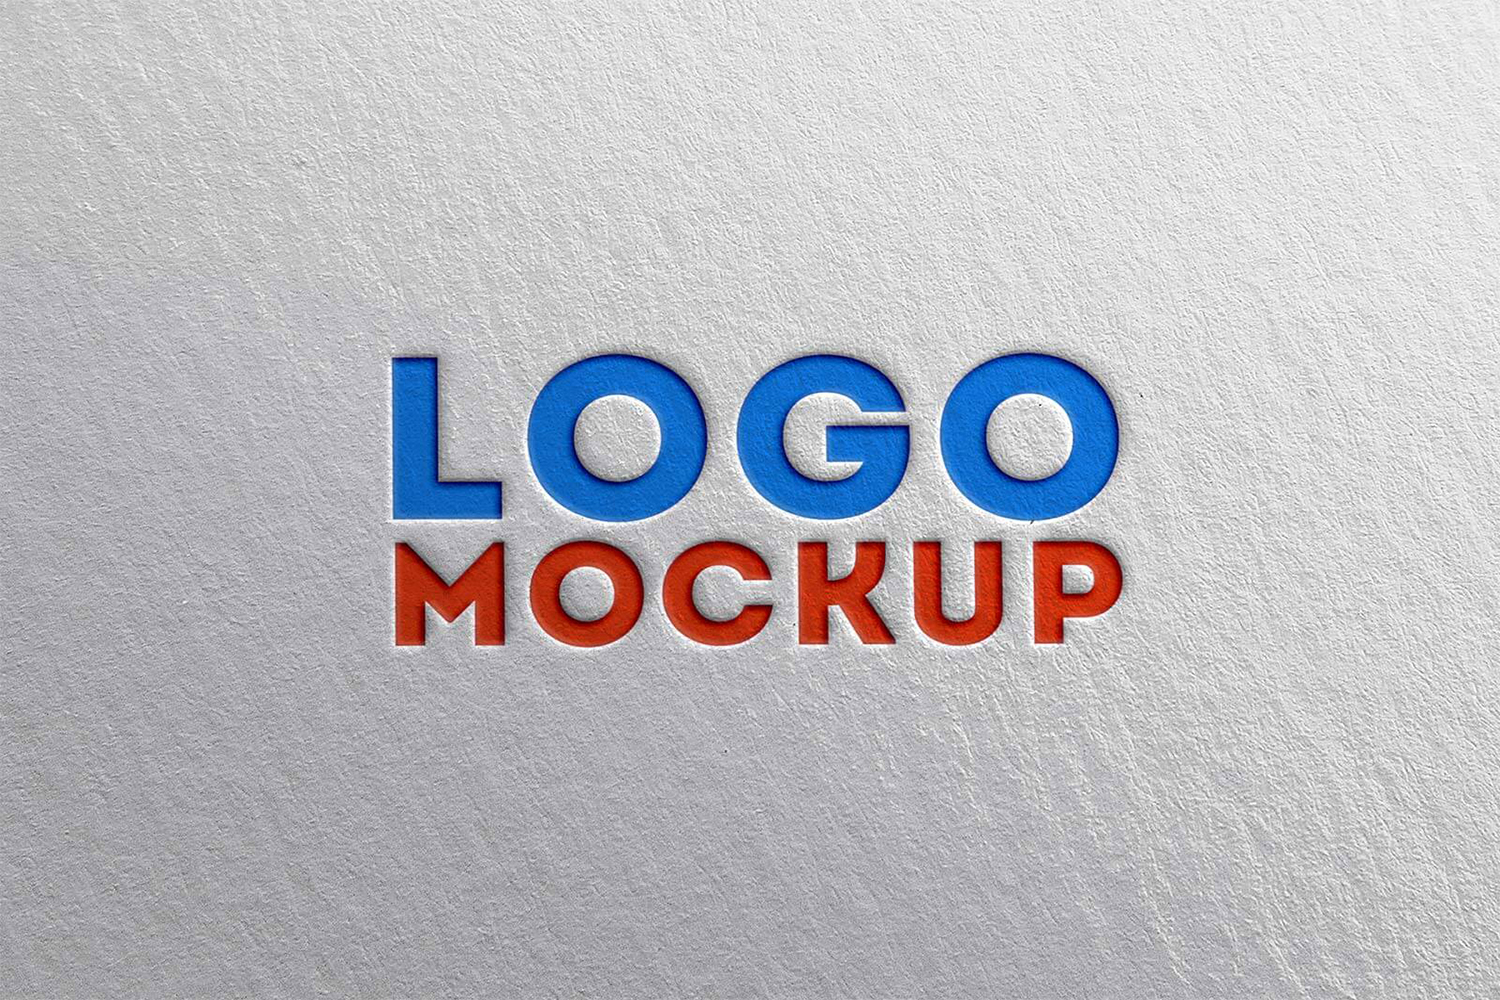 Texture Paper Letterpress Logo Mockup PSD Free Download